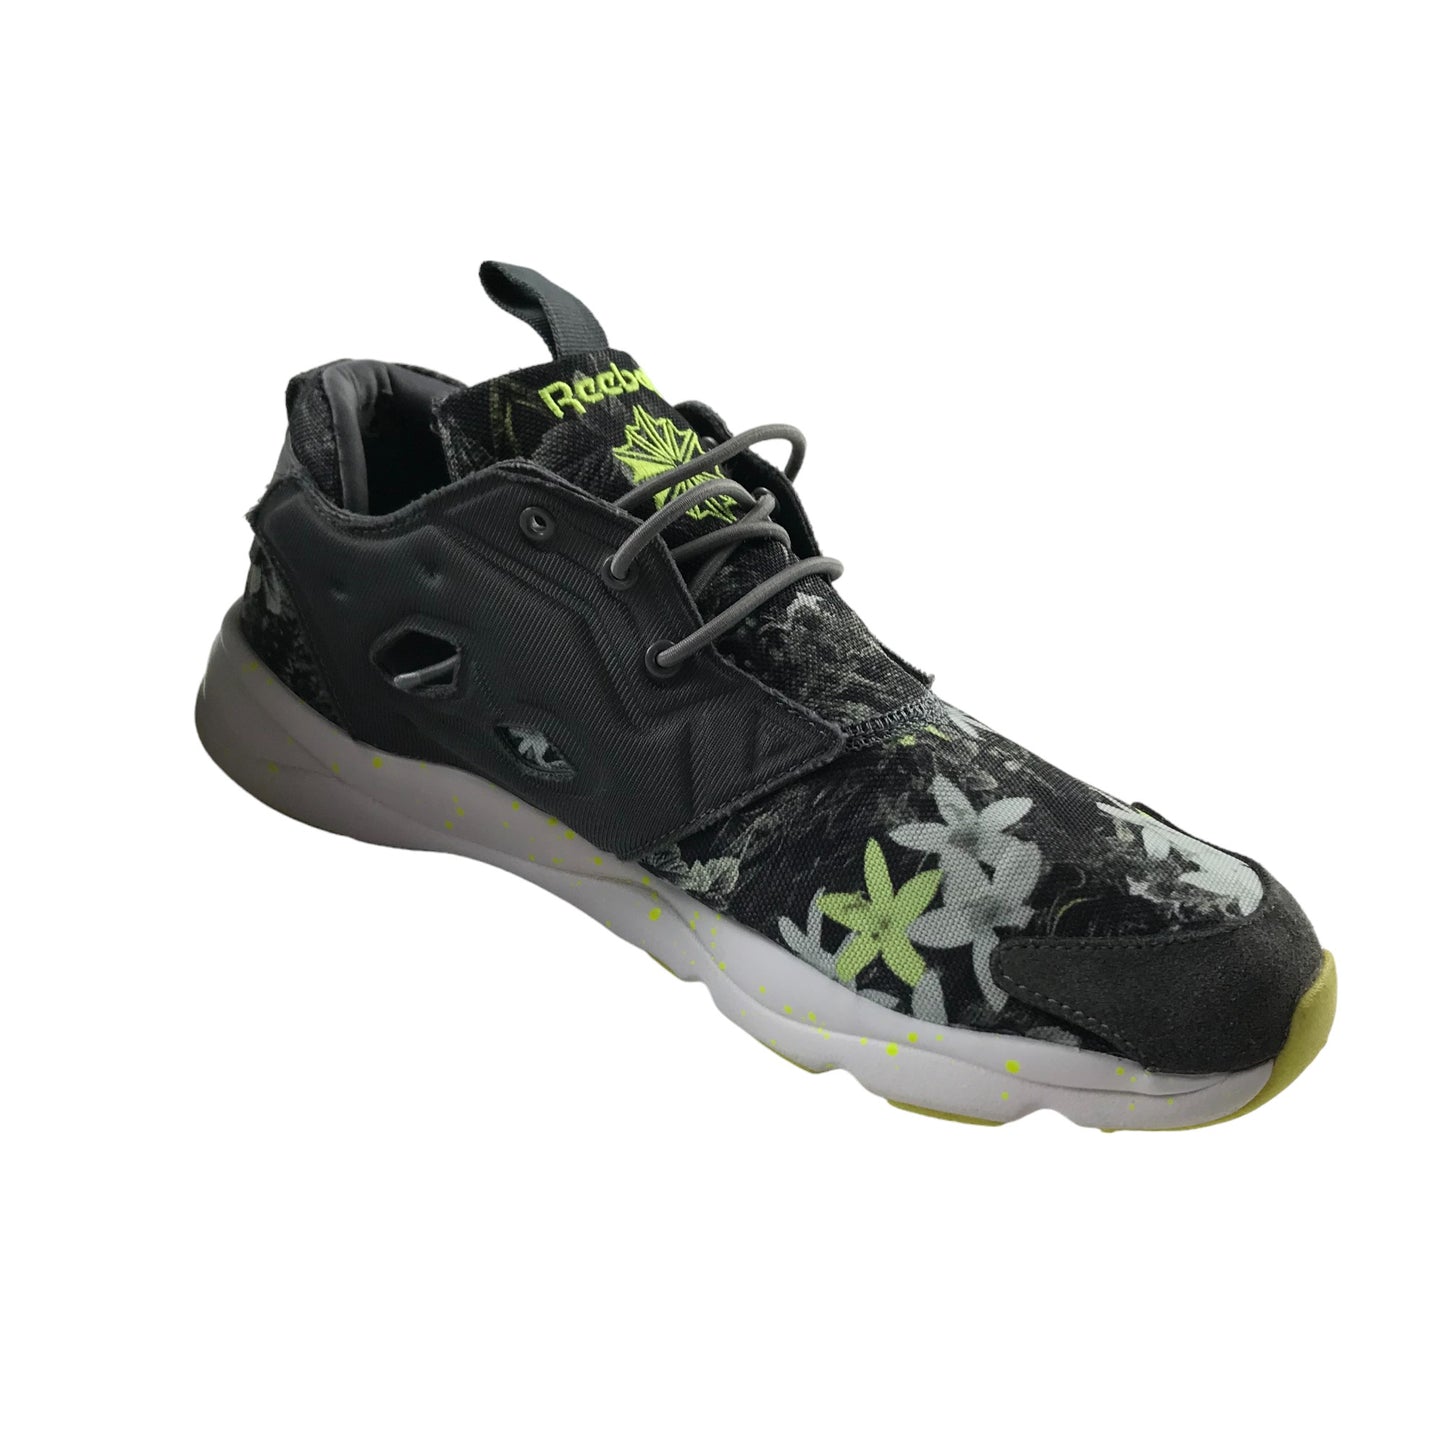 Reebok Trainers Shoe Size 7 Black Grey Floral Open Sides